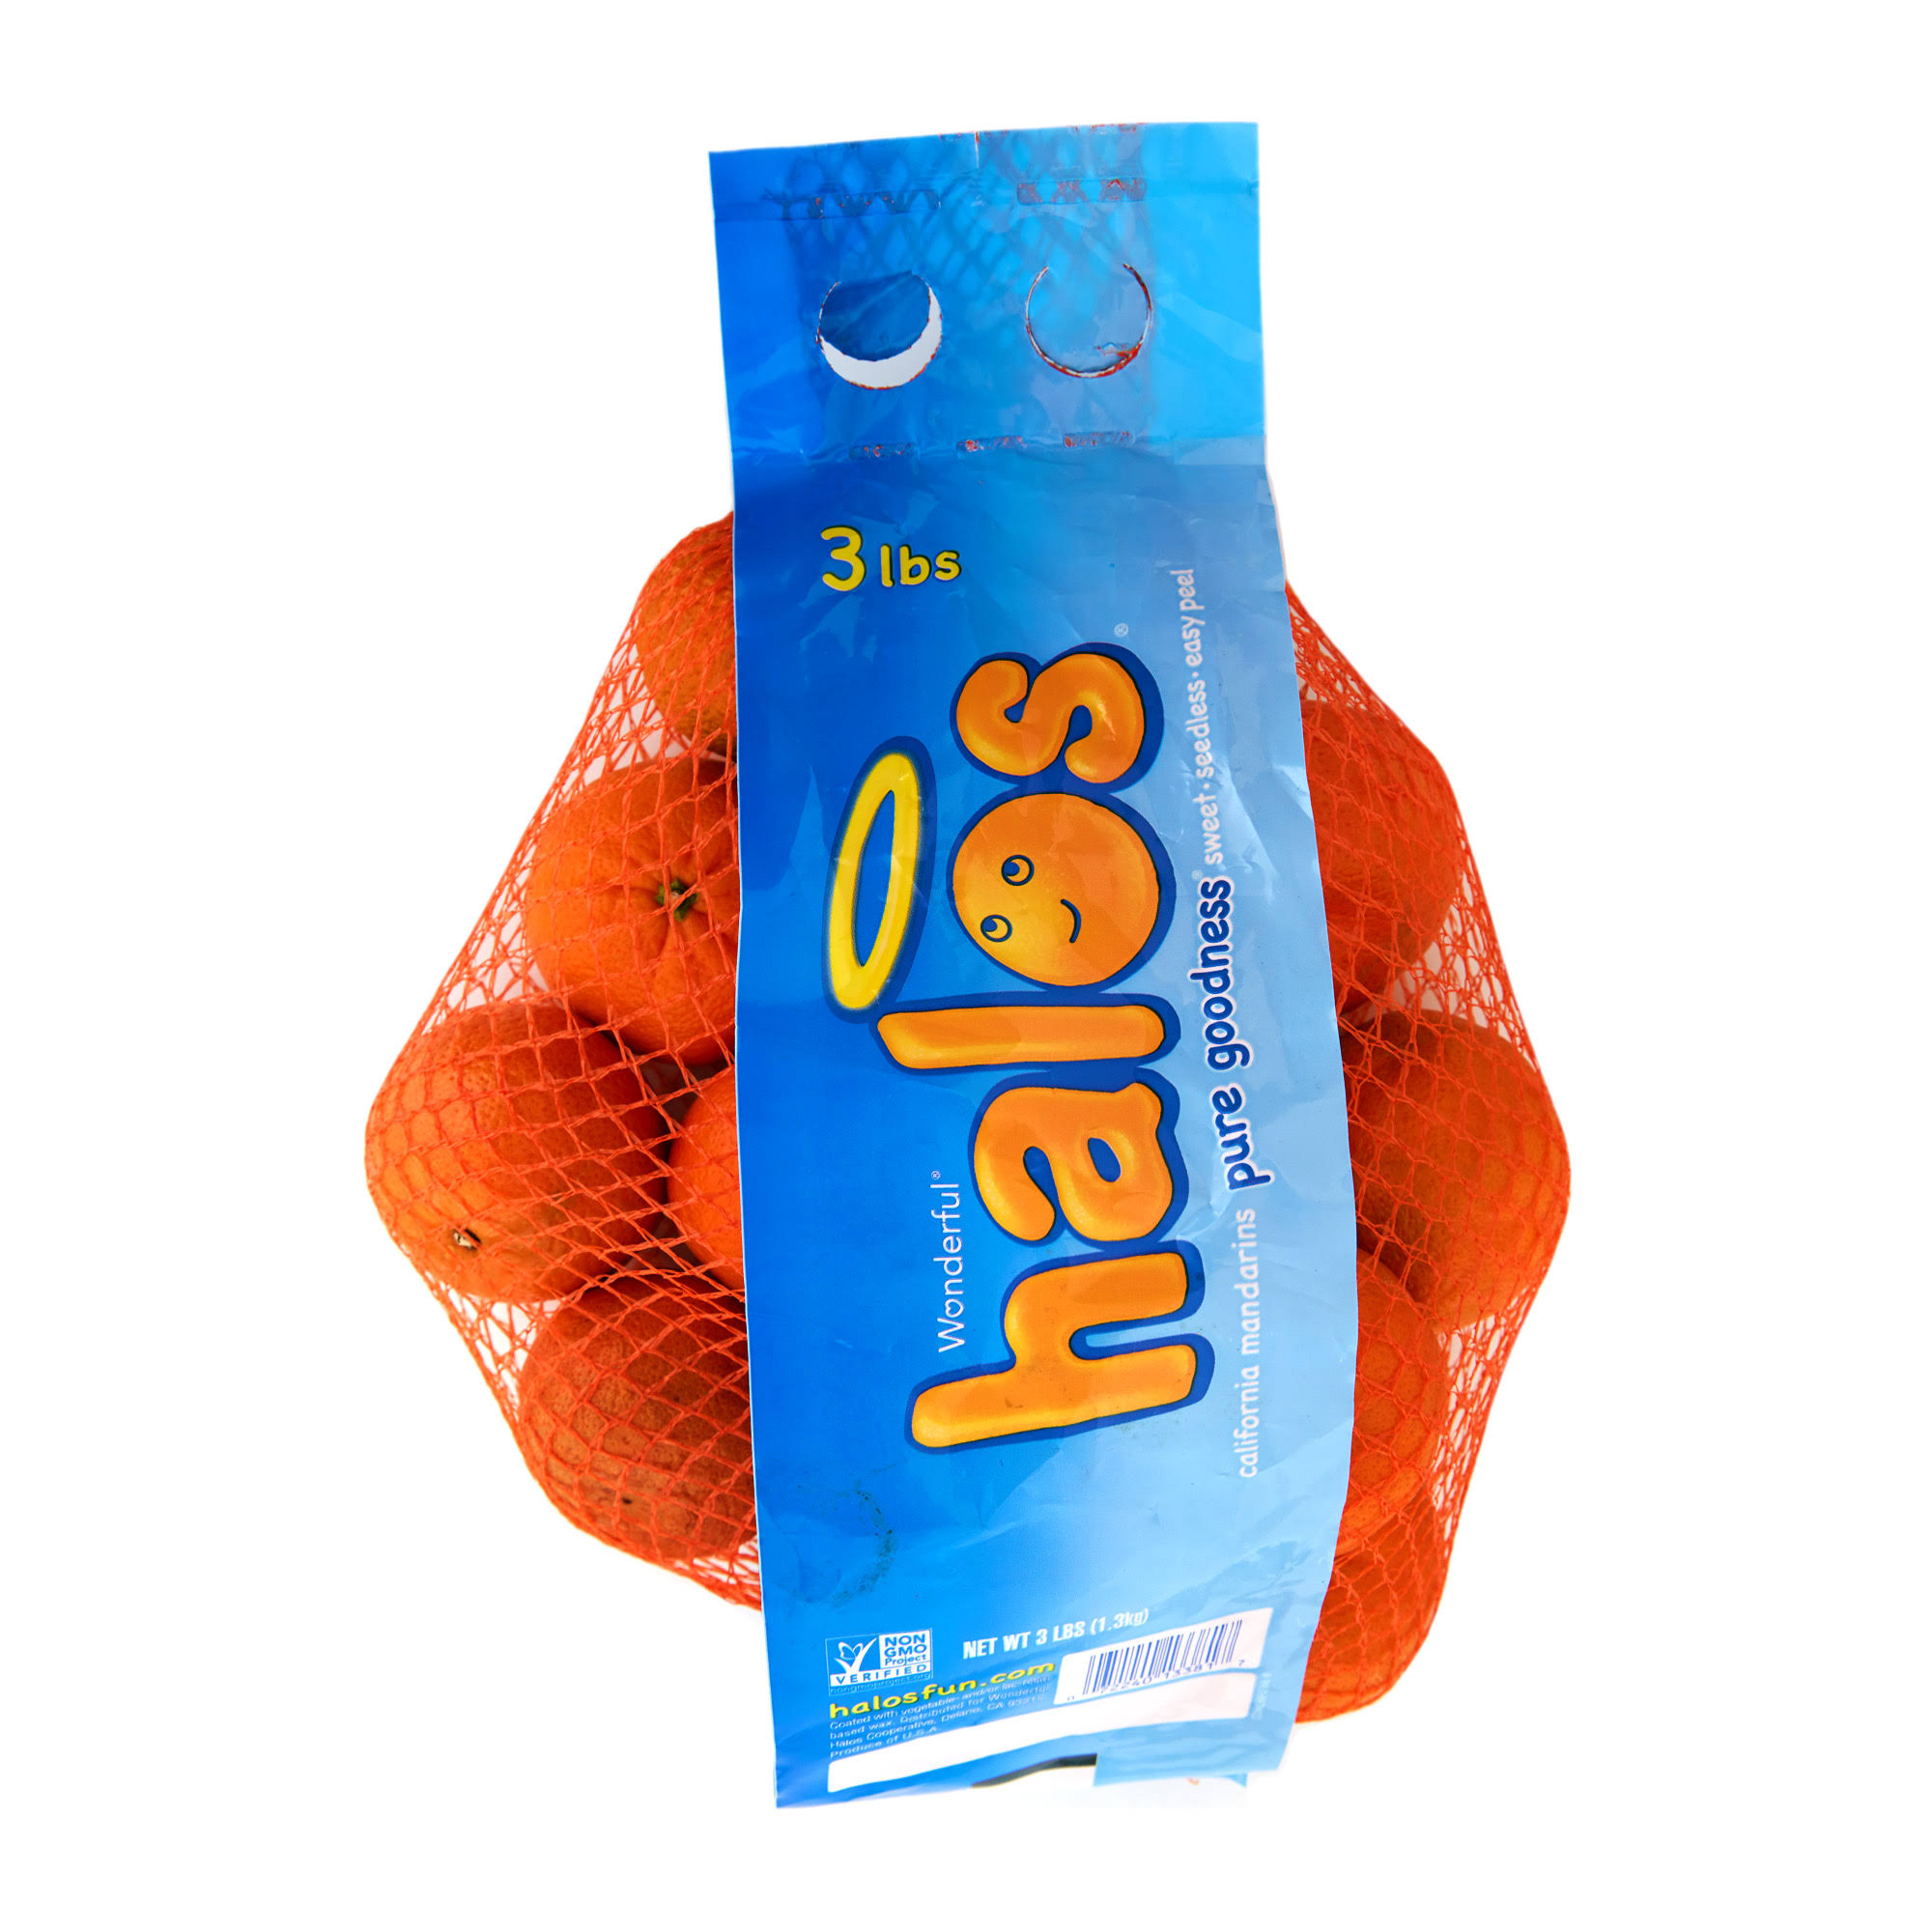 Halos California Clementines - 3 lb